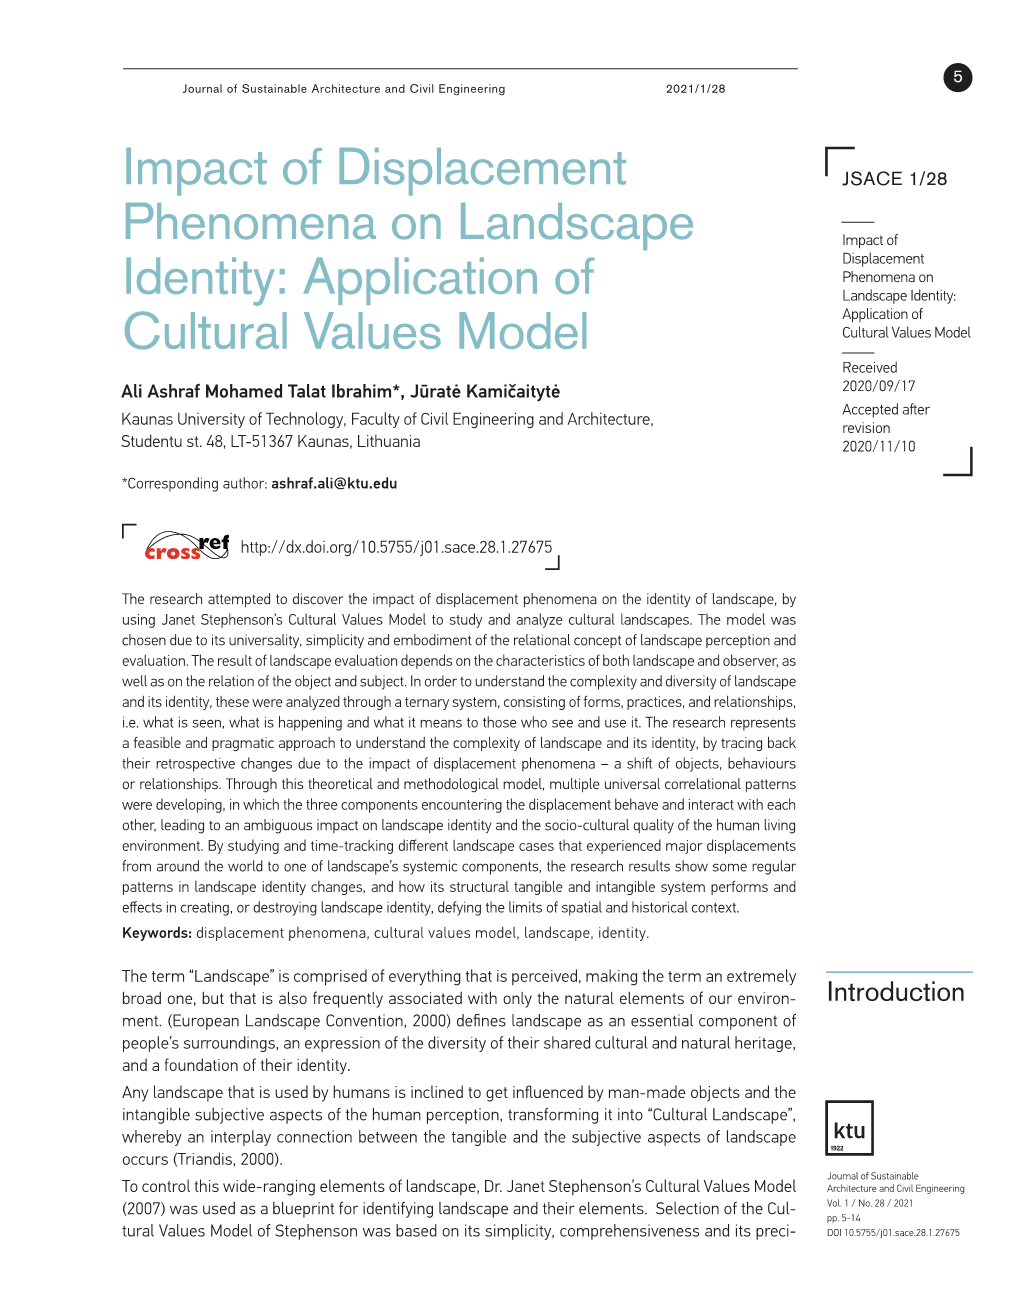 Impact of Displacement Phenomena on Landscape Identity